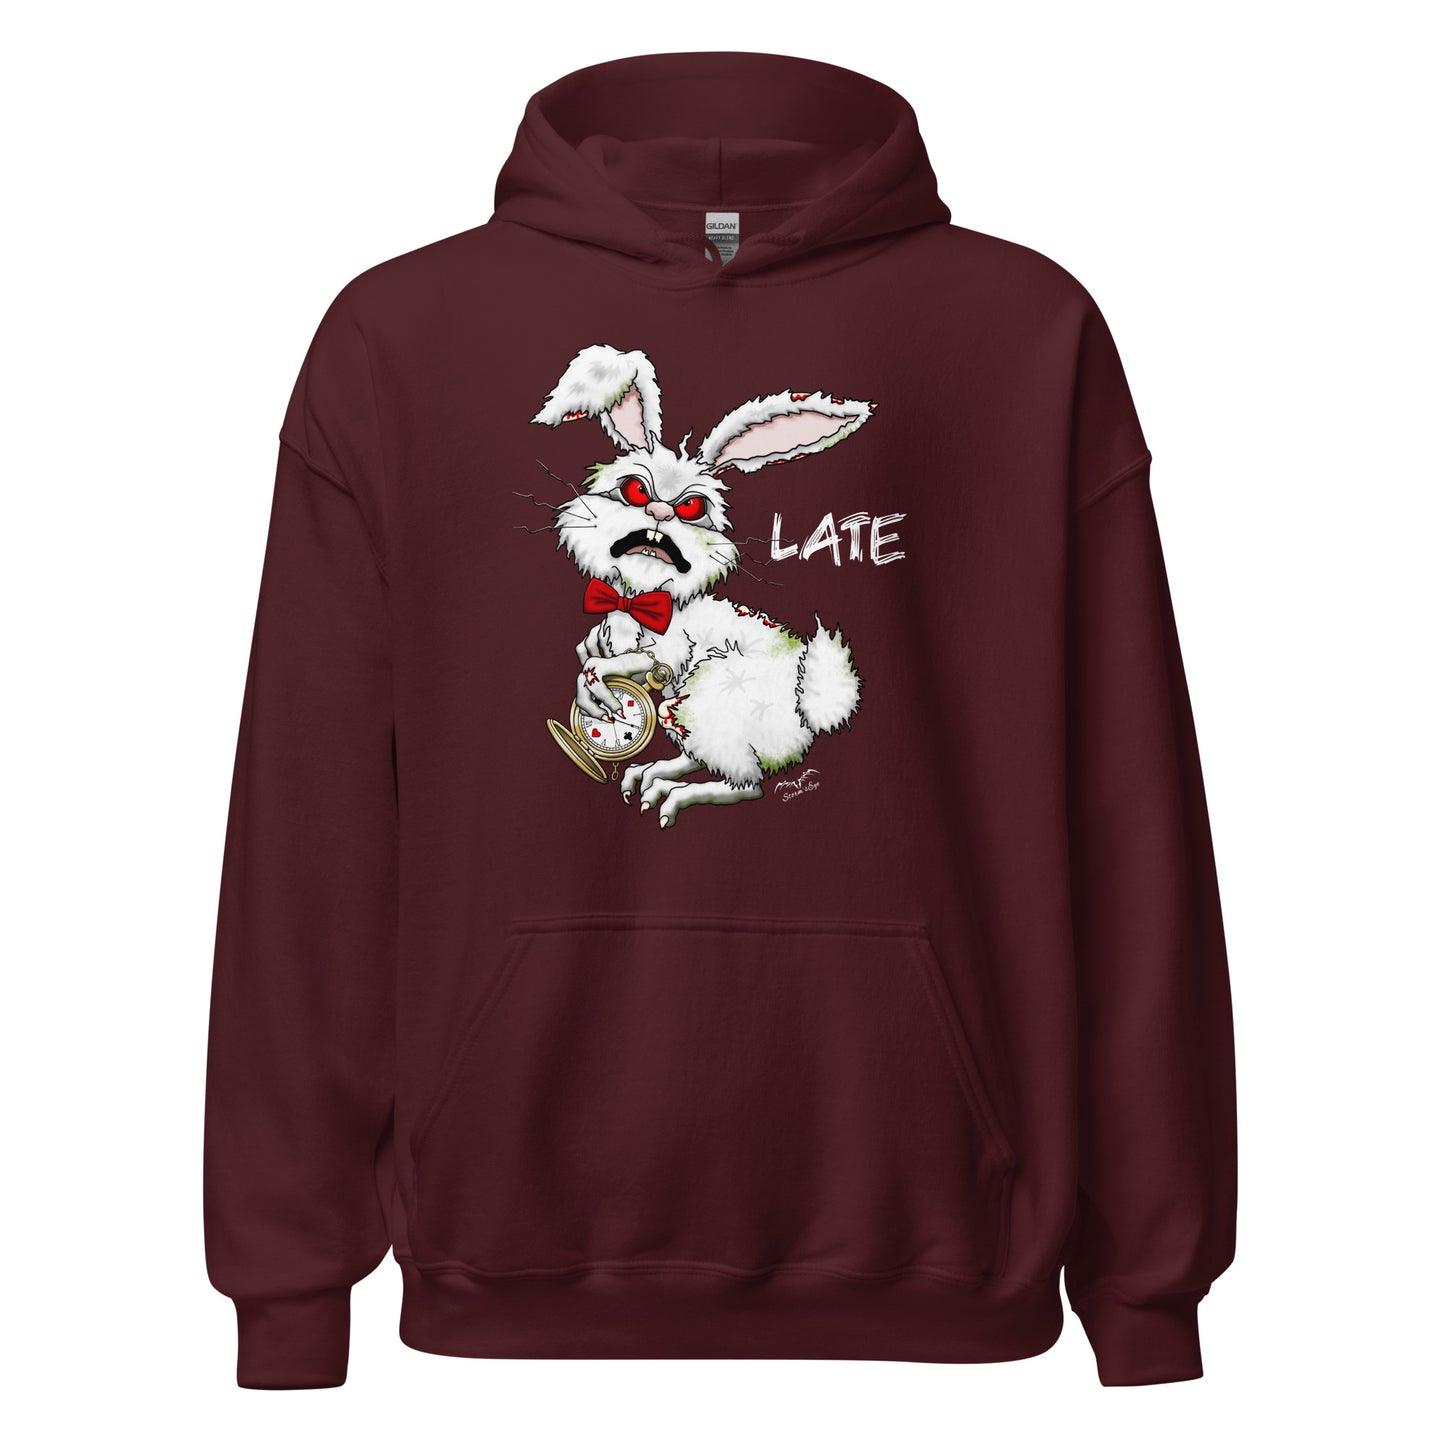 stormseye design zombie white rabbit hoodie flat view maroon red